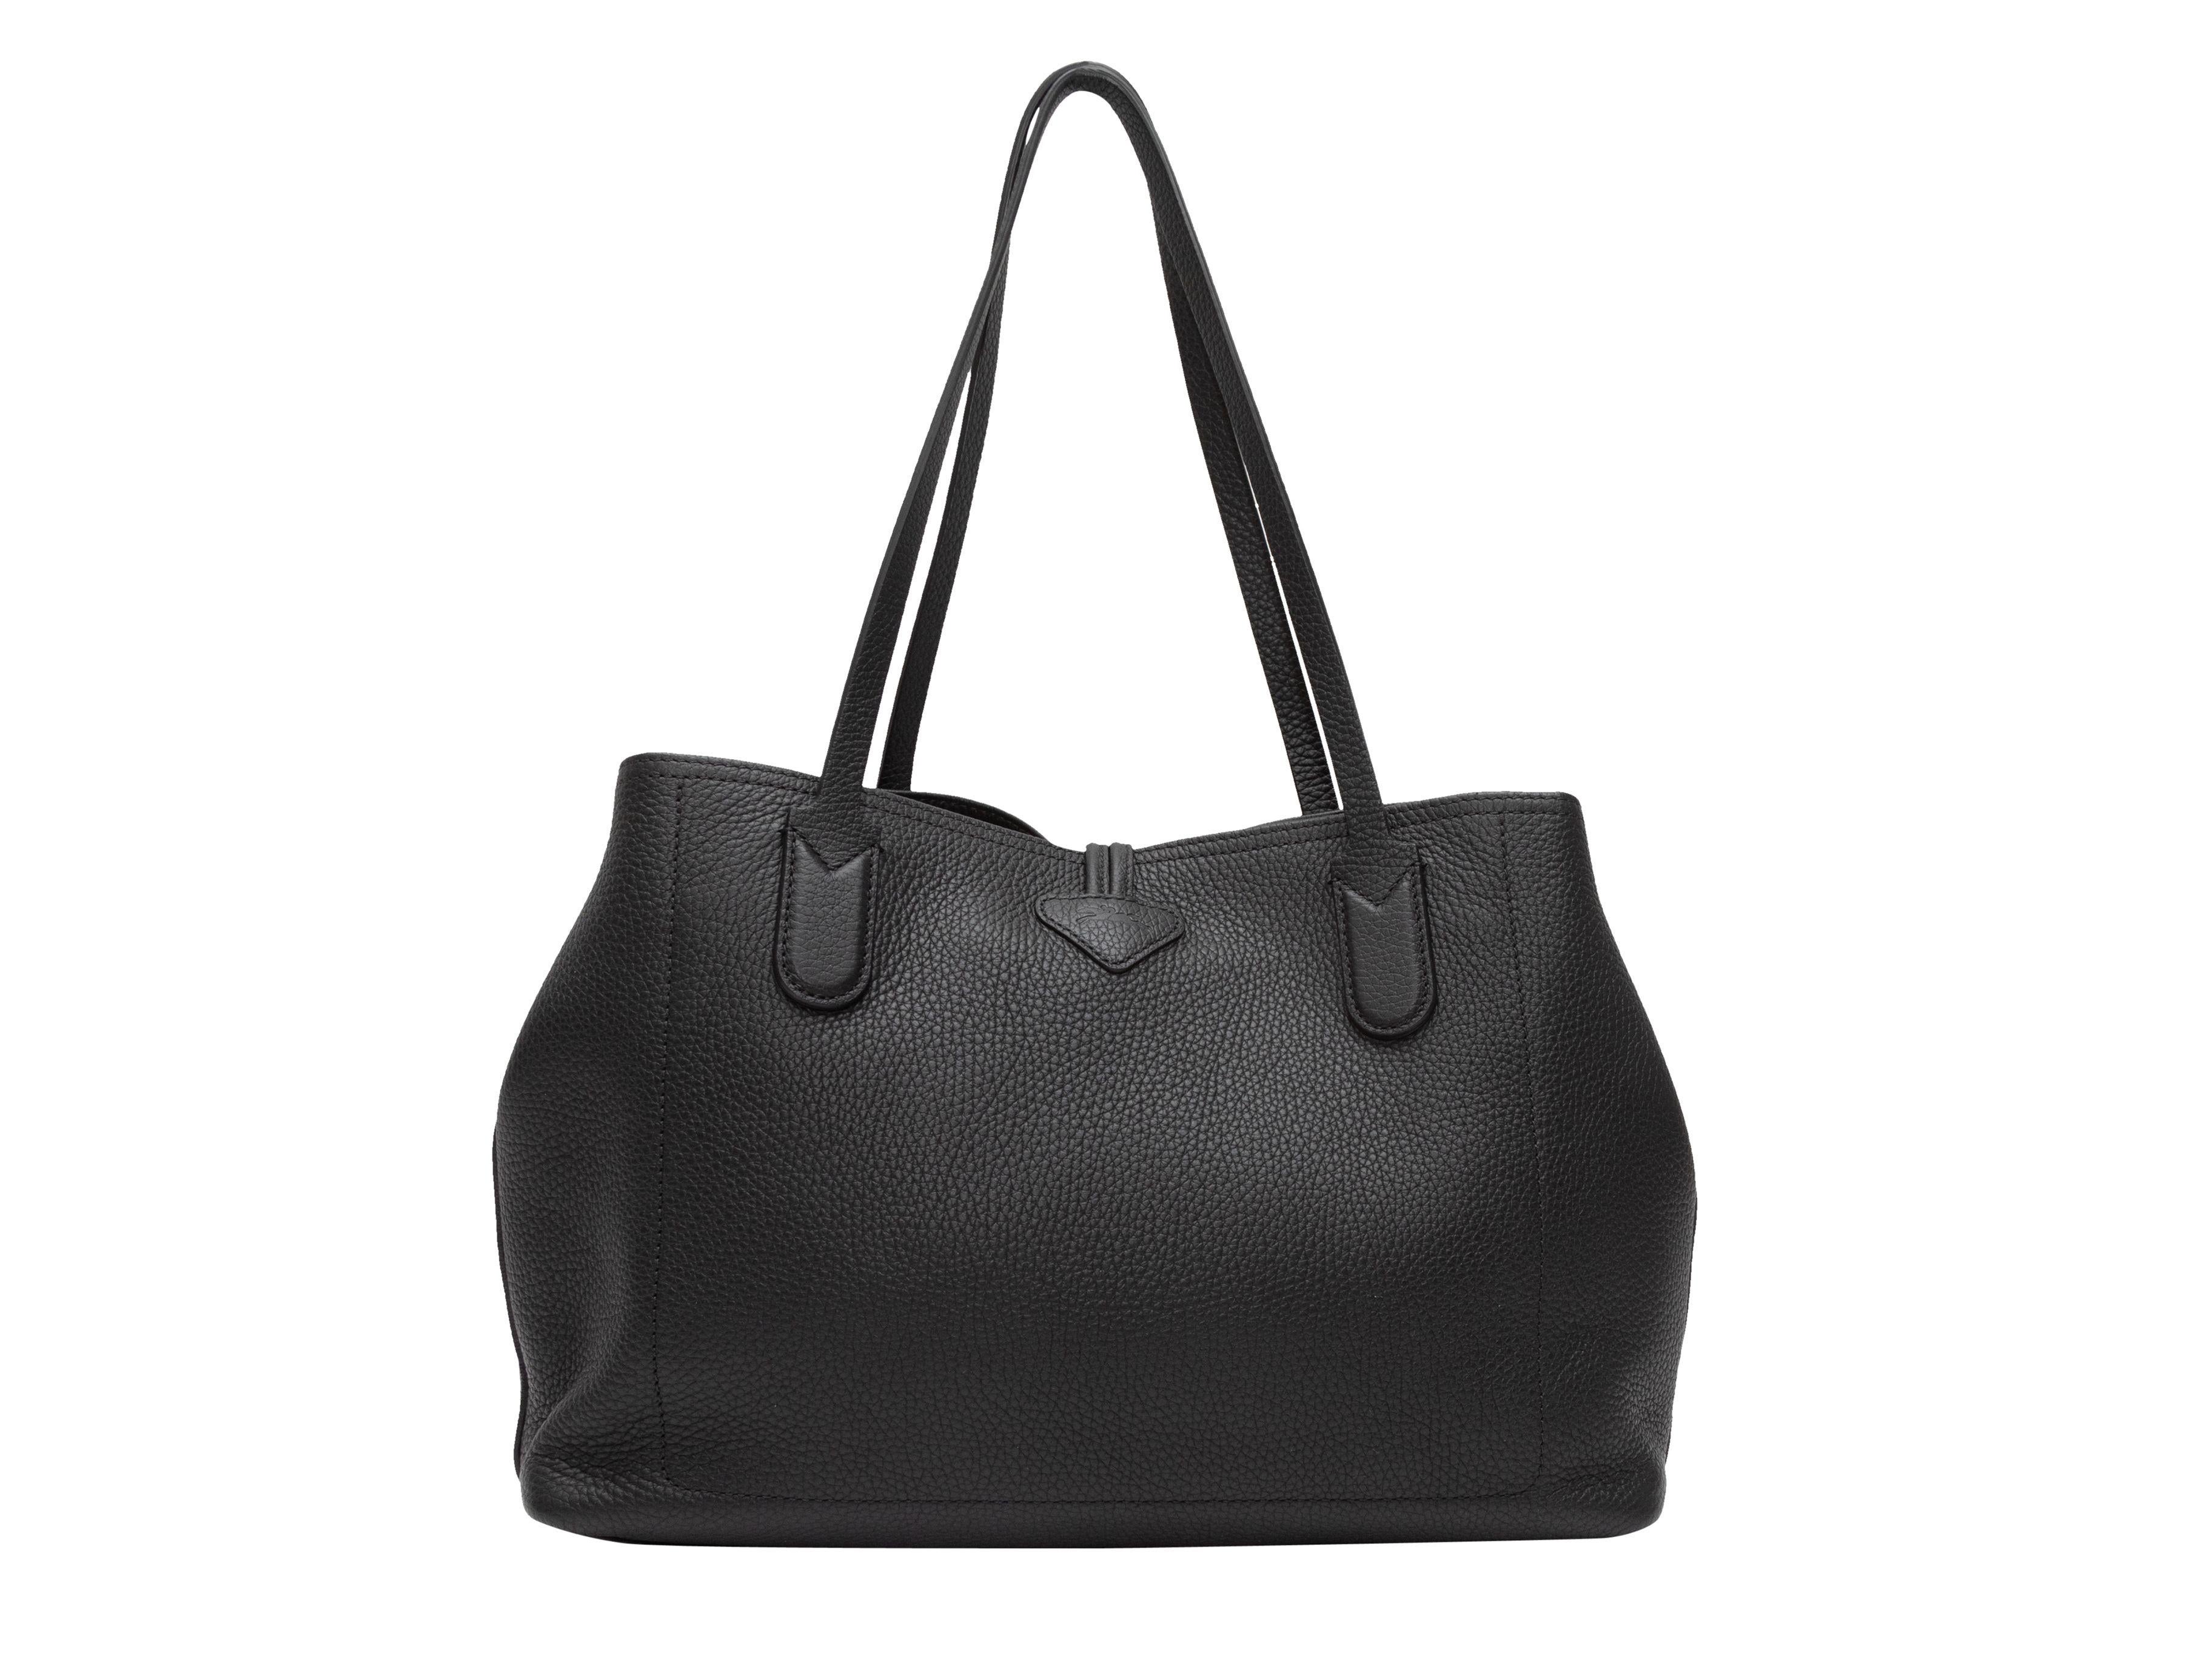 Longchamp Black Leather Tote Bag 3